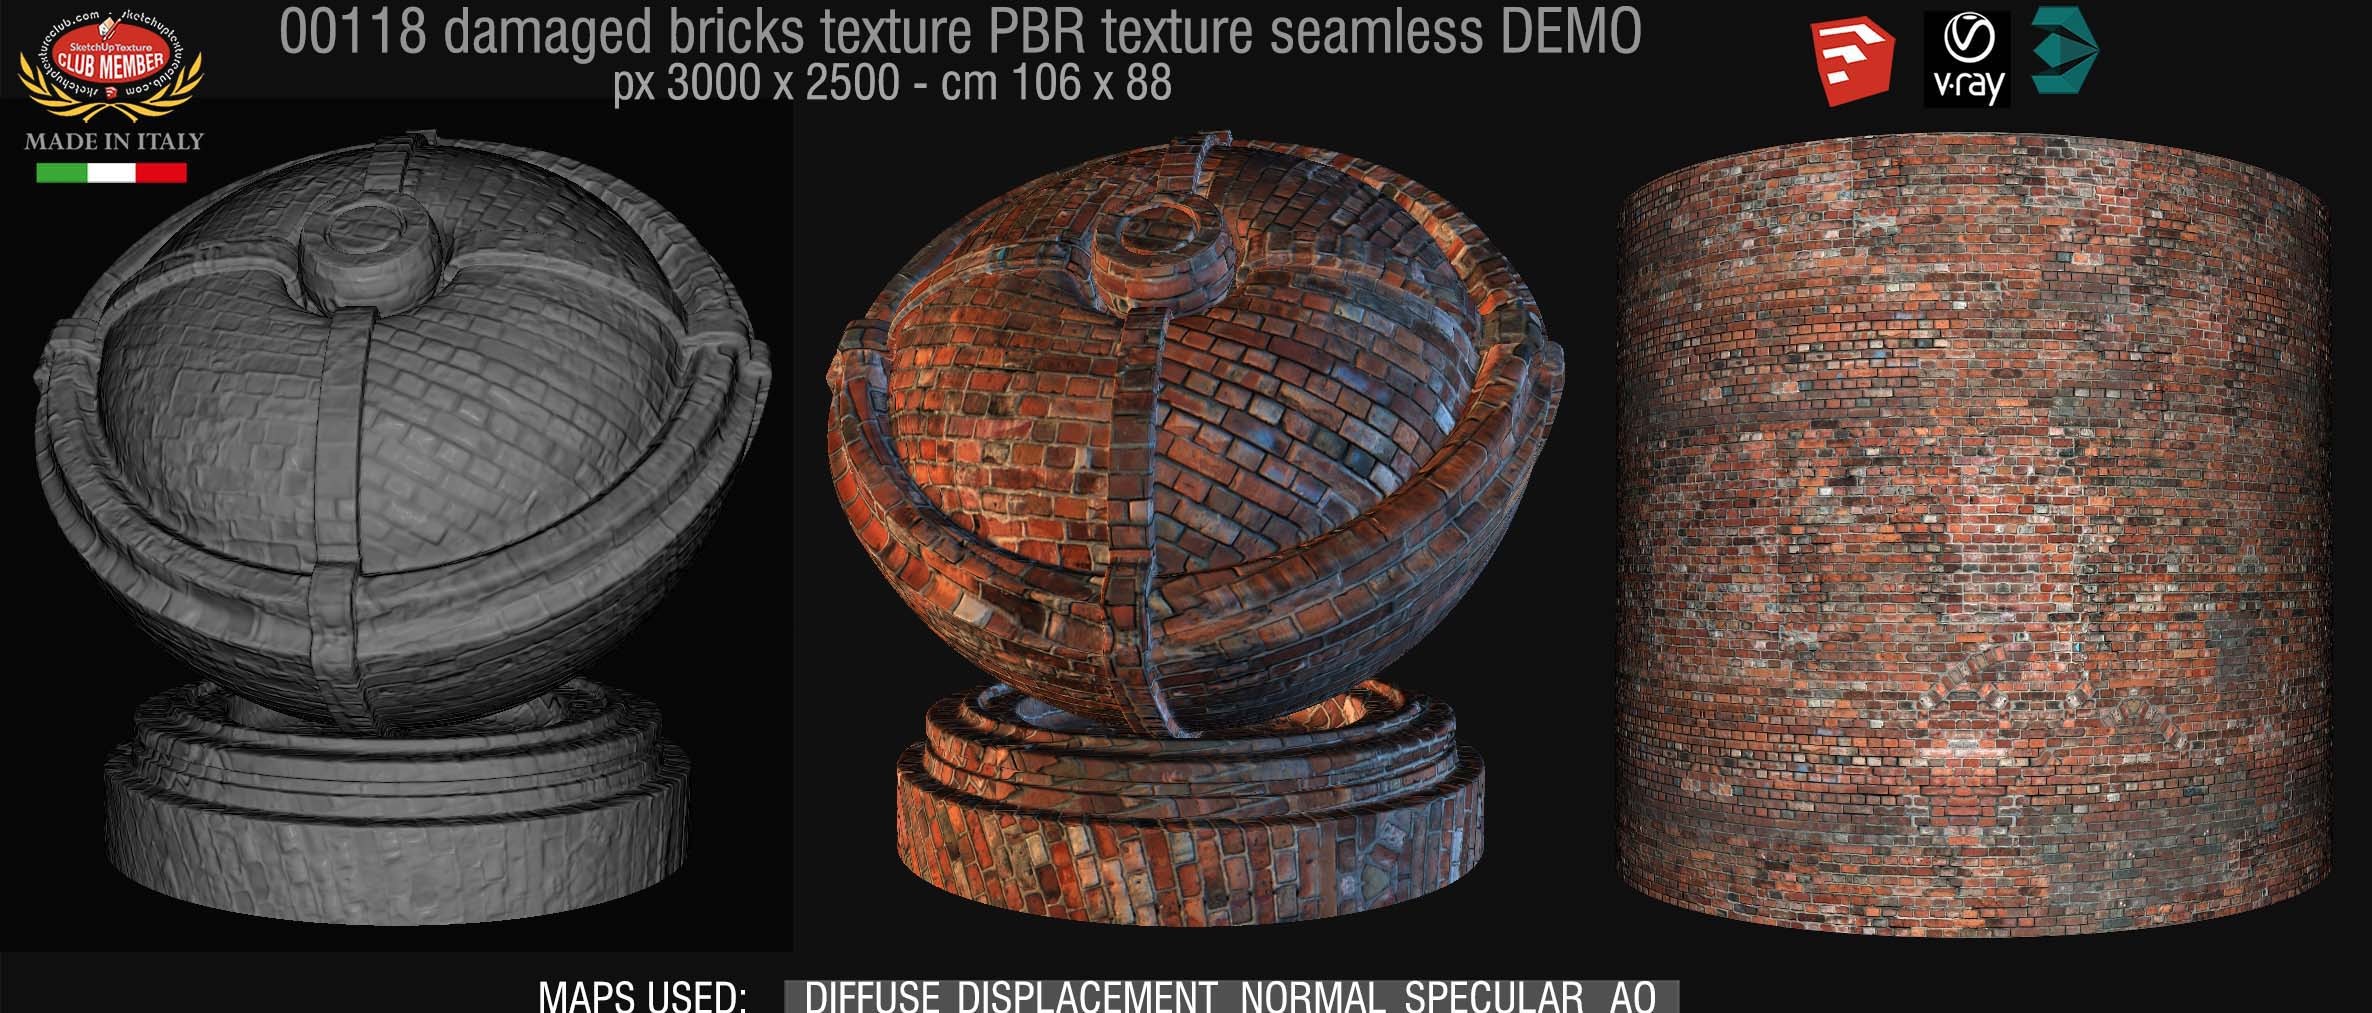 00118 Damaged bricks PBR texture seamless DEMO